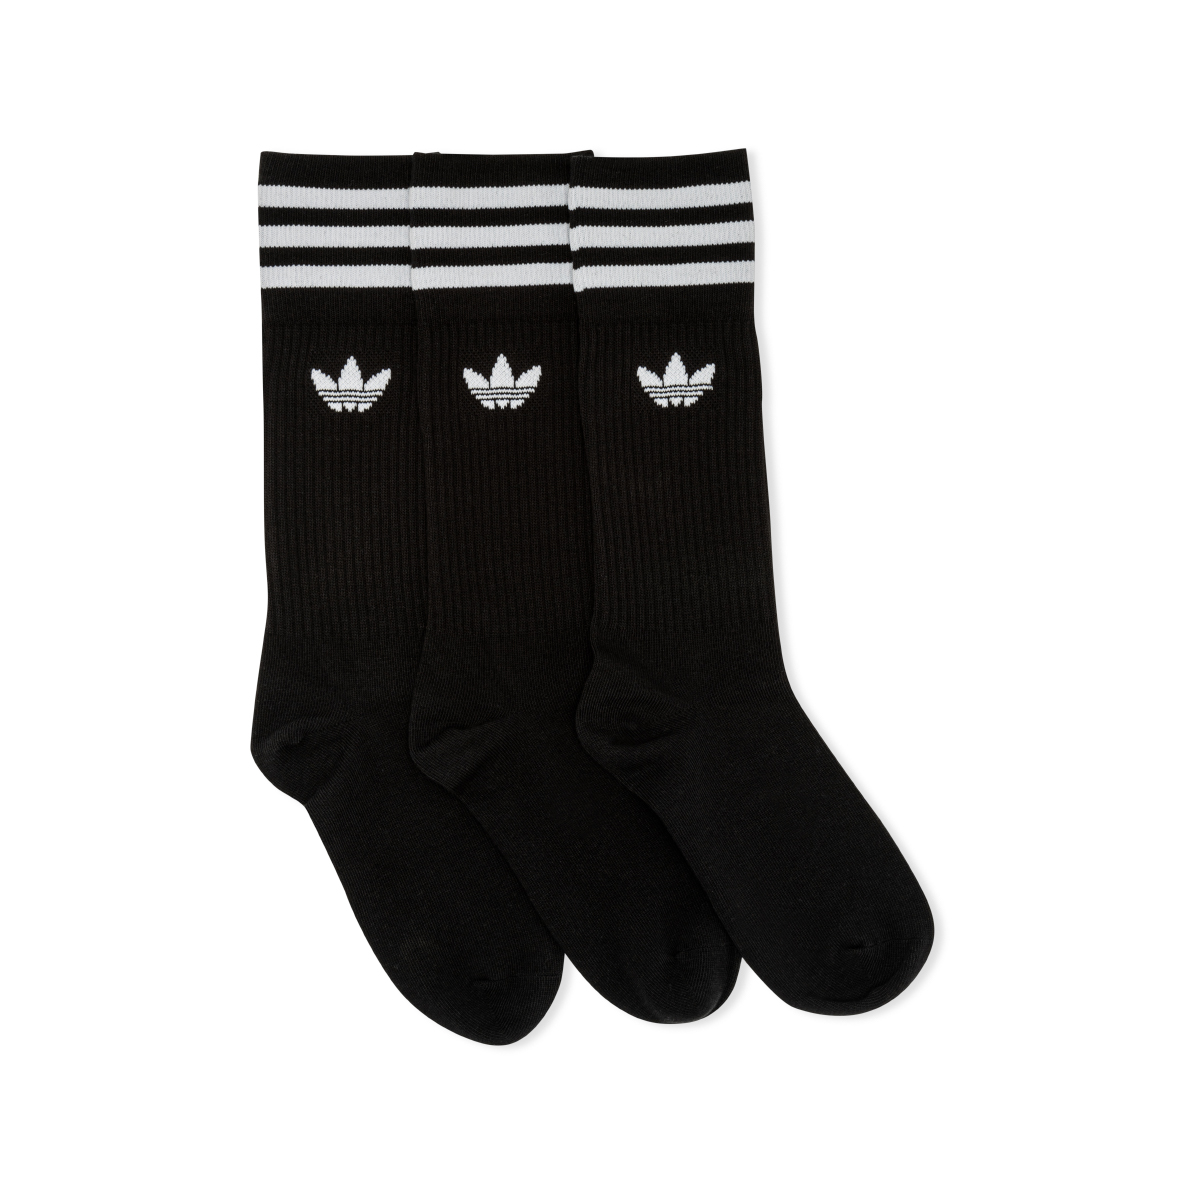 Buy Adidas 3 Pack Trefoil Crew Socks online | Foot Locker Kuwait